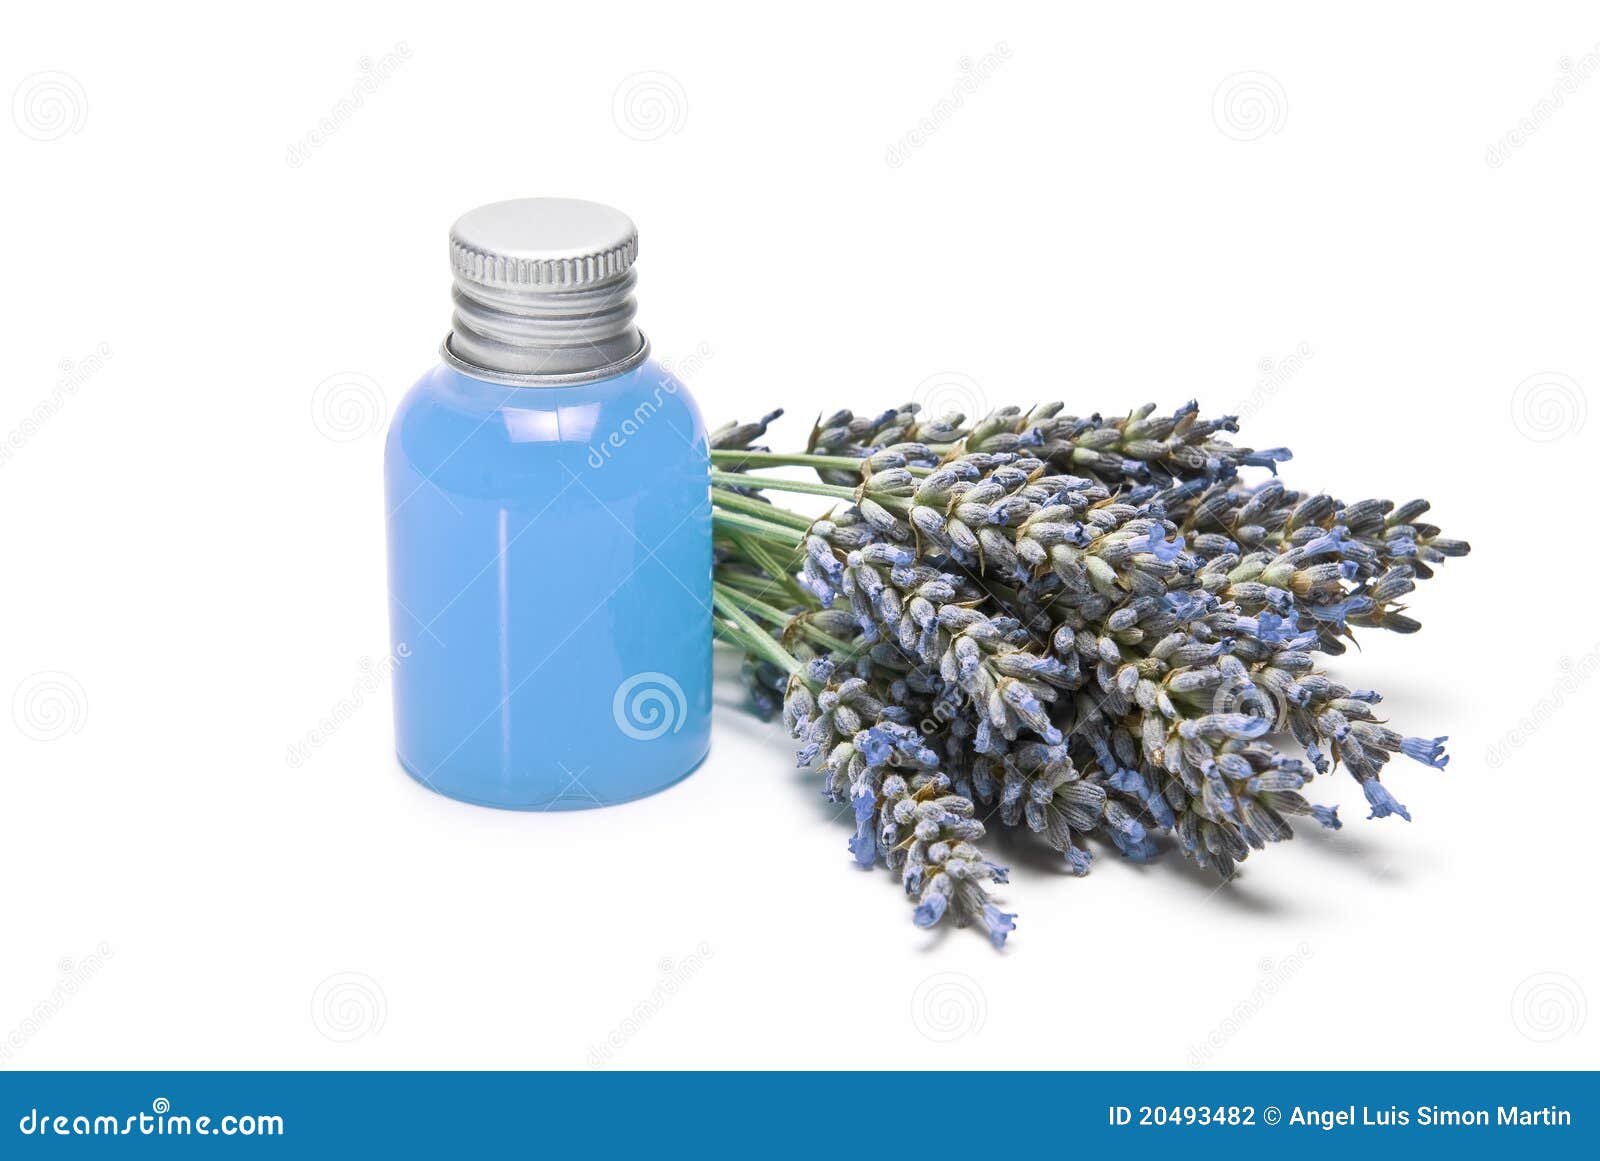 5. Lavender Gel Nail Art Supplies - wide 10